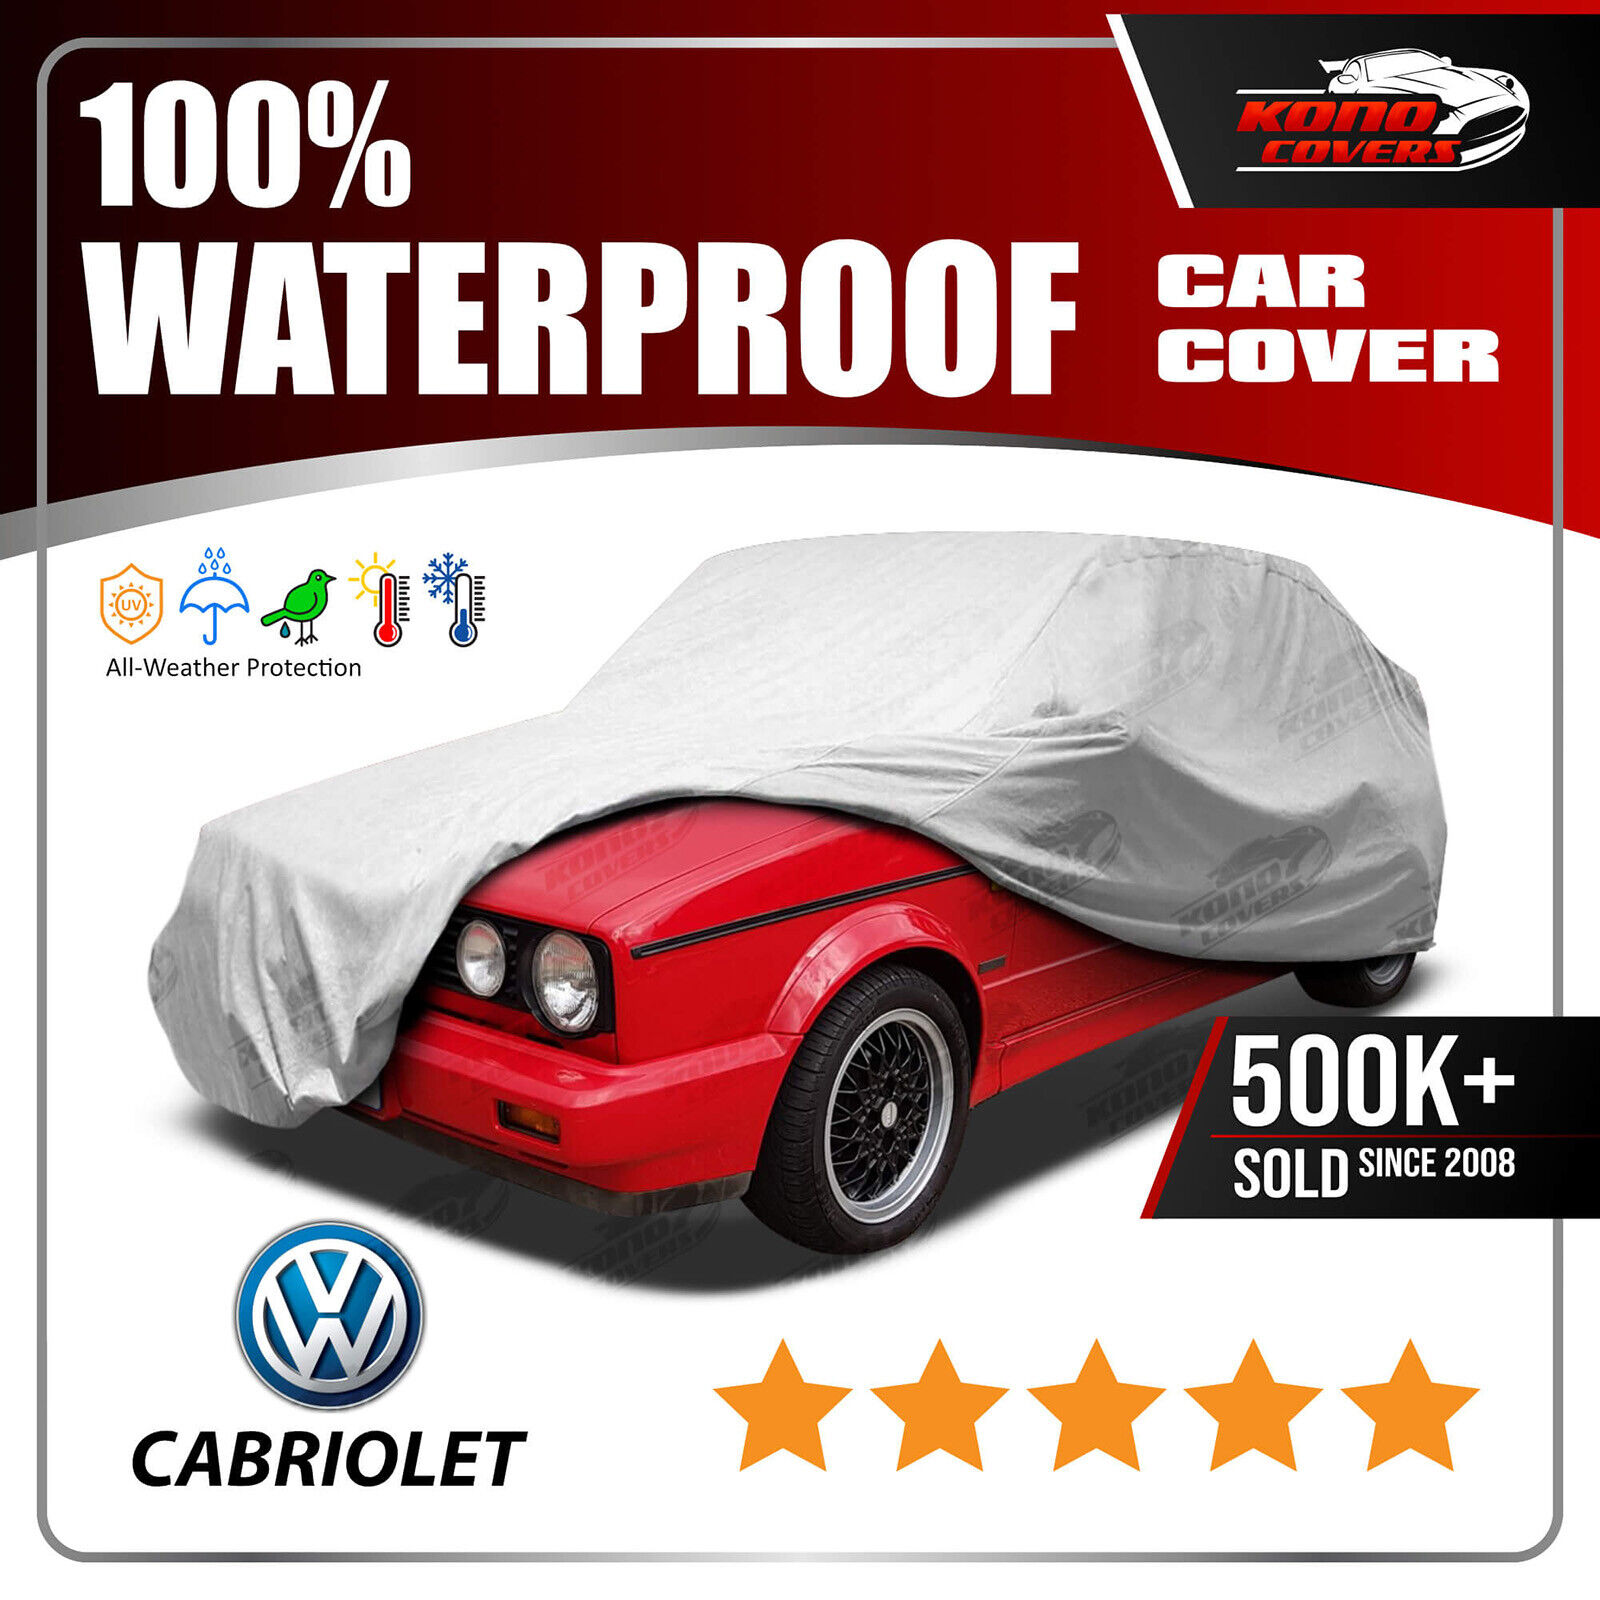 VOLKSWAGEN CABRIOLET 1985-1993 CAR COVER - 100% Waterproof 100% Breathable